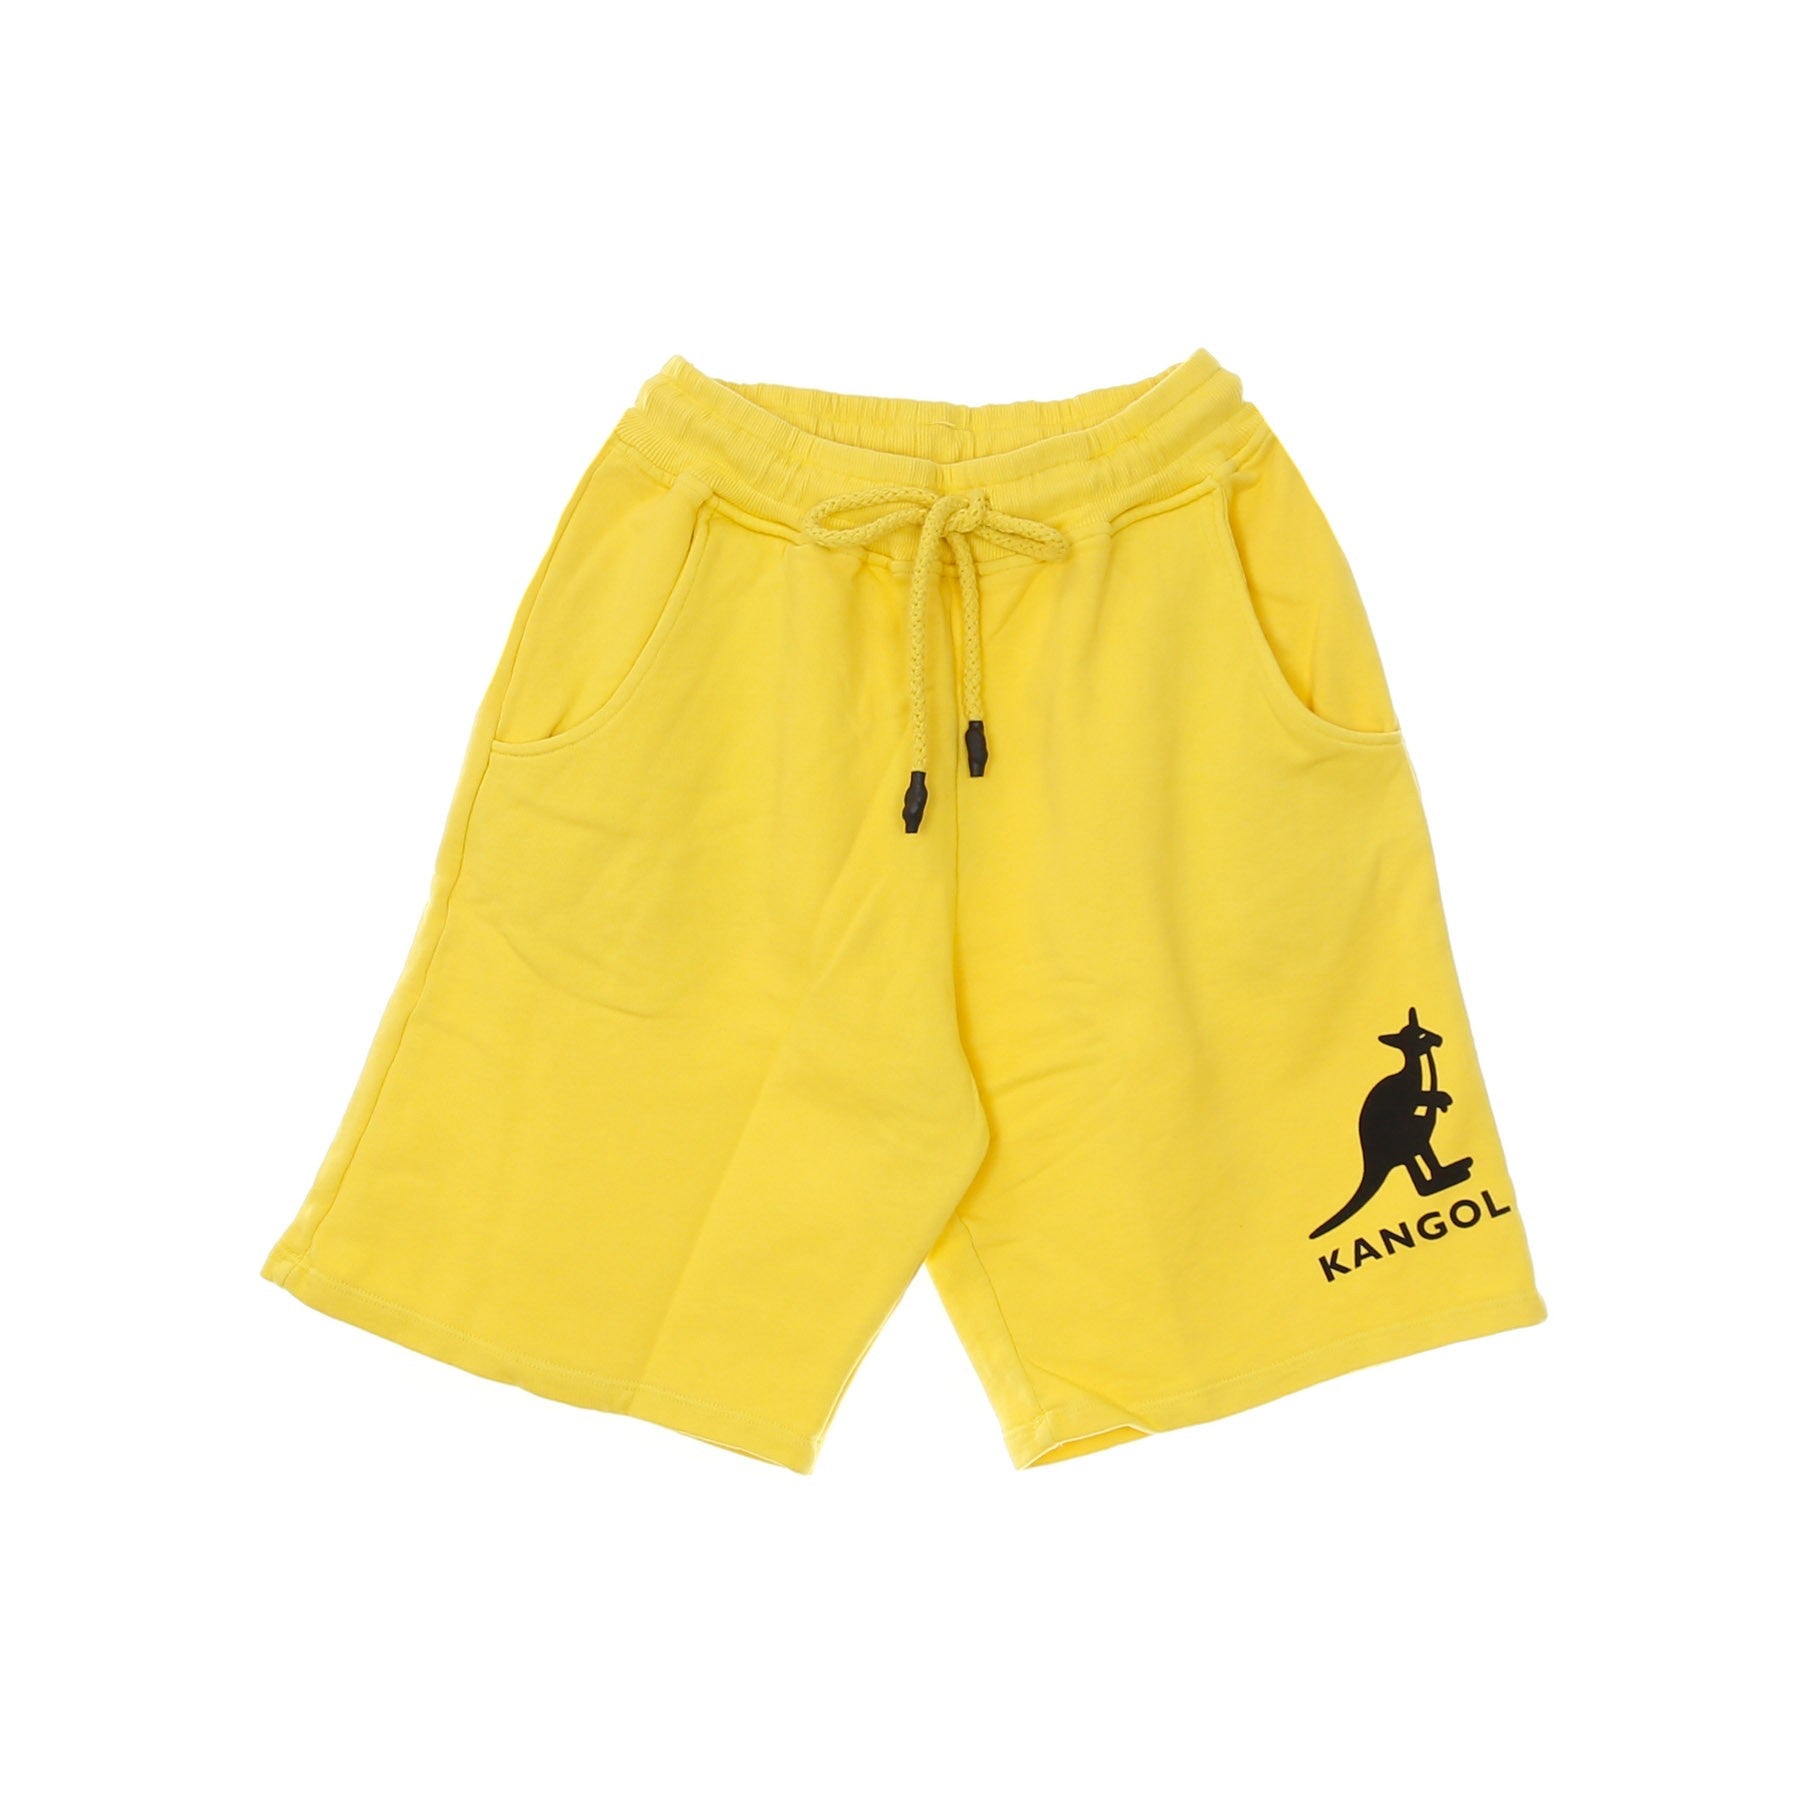 Kangol, Pantalone Corto Tuta Uomo Fulton, Yellow/black